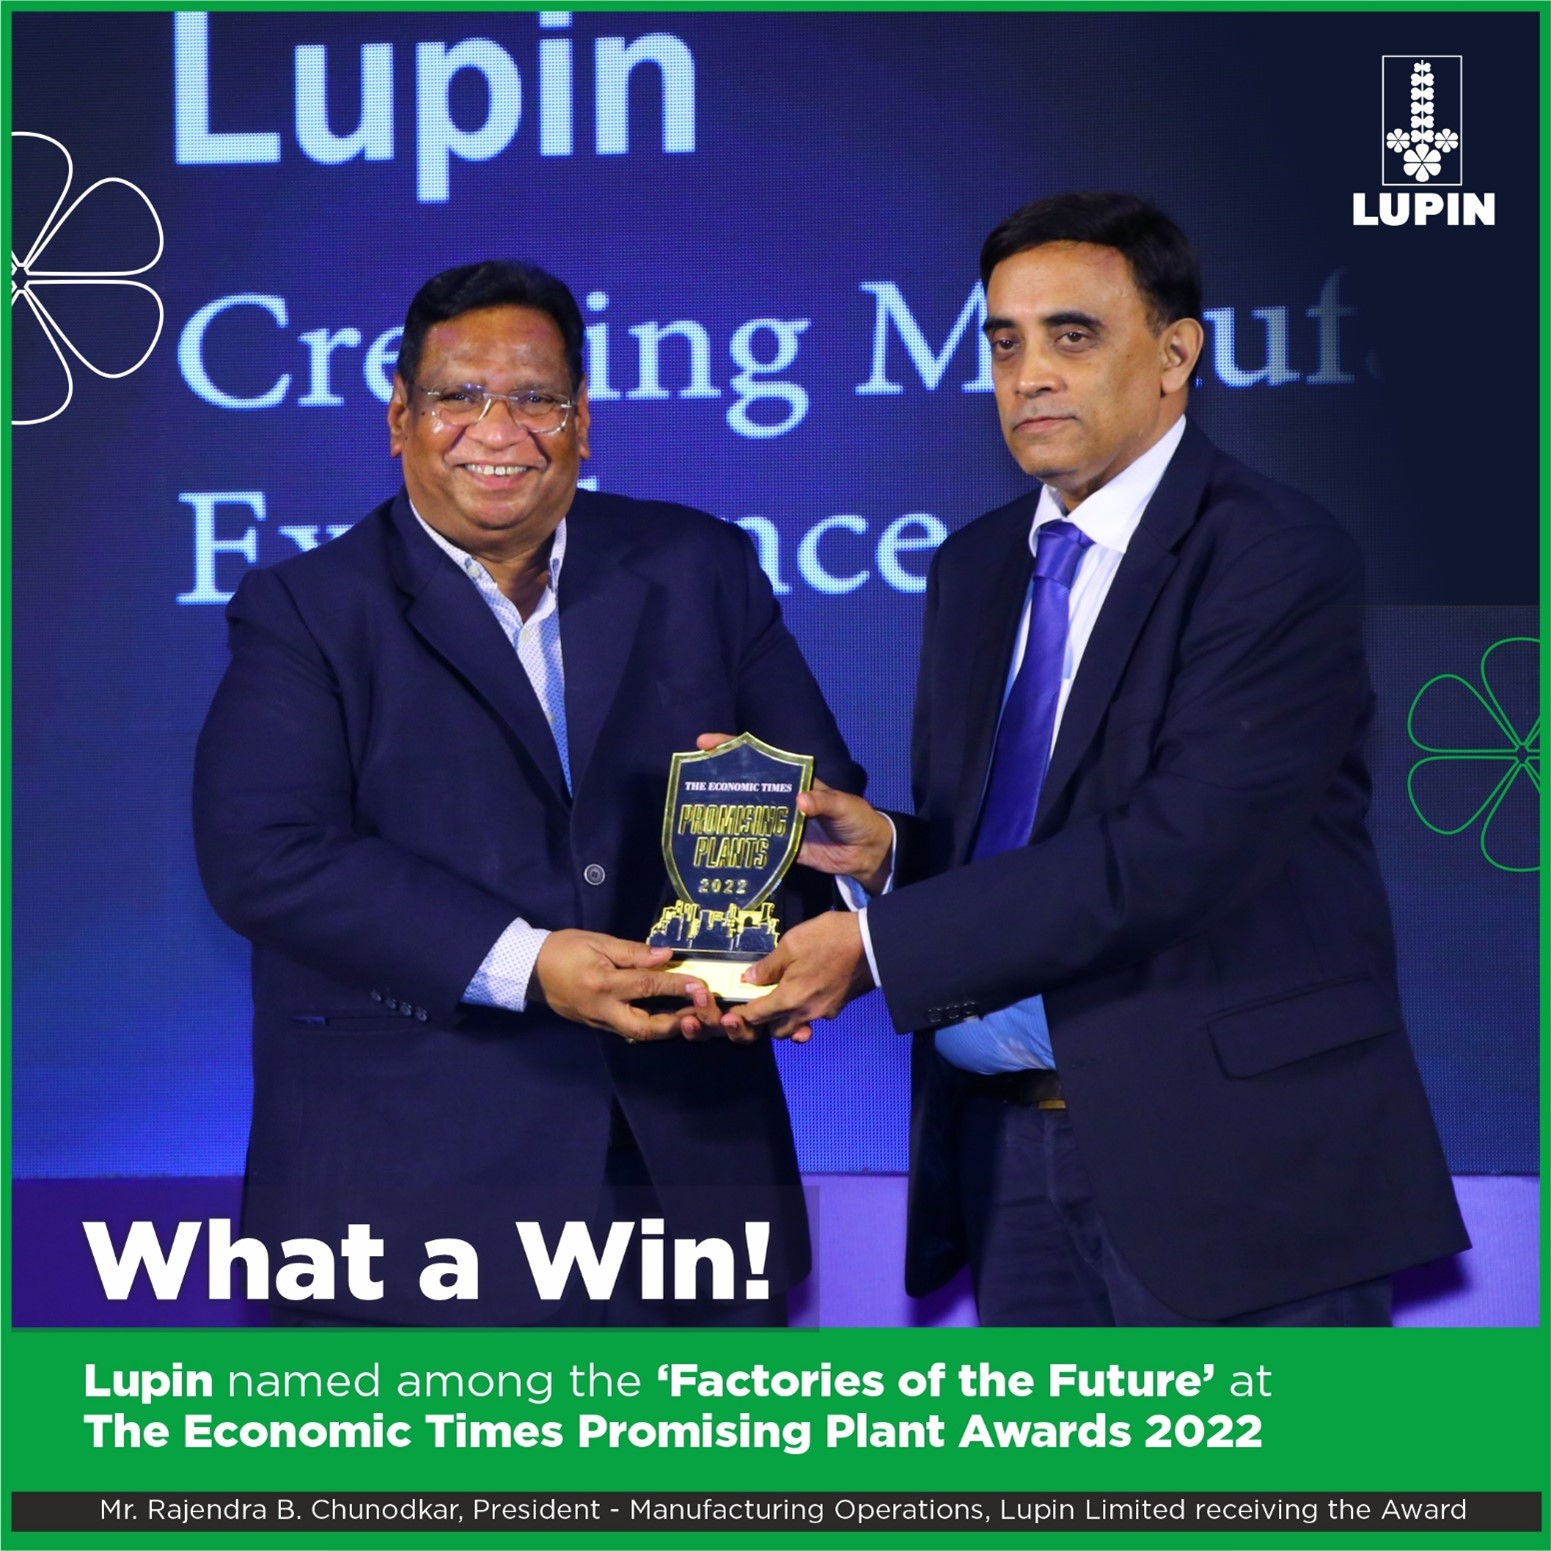 lupin investor presentation 2022